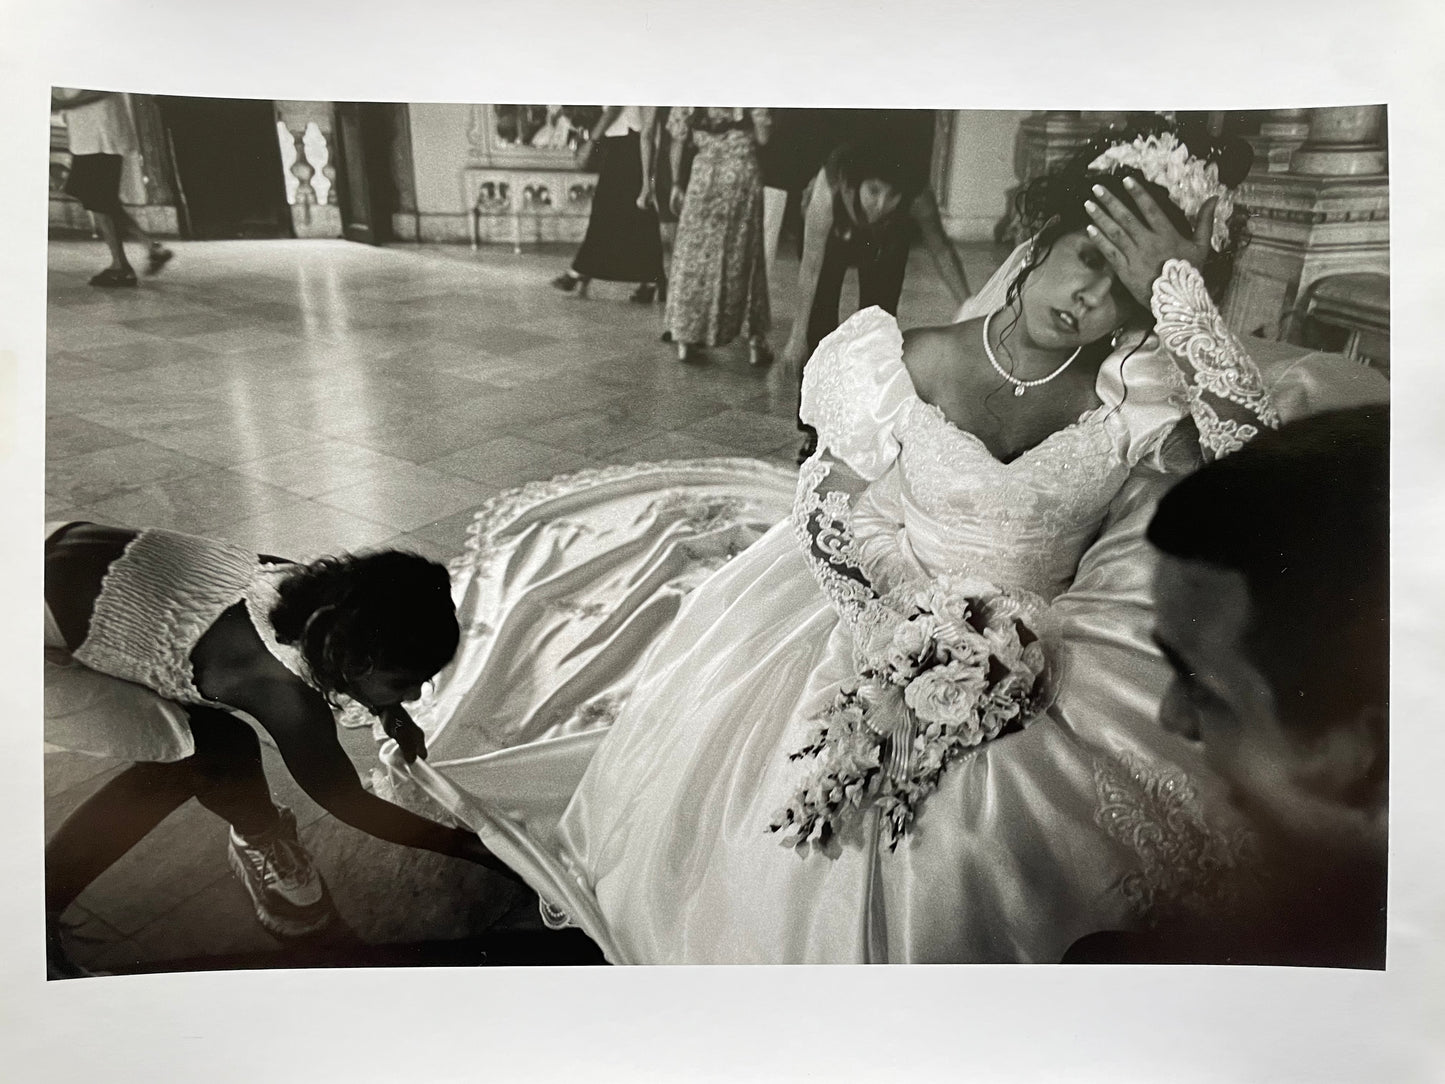 Susan S. Bank (American, 20th c.) Cuba Photograph Print Piercing through the darkness 11x14 “Wedding”